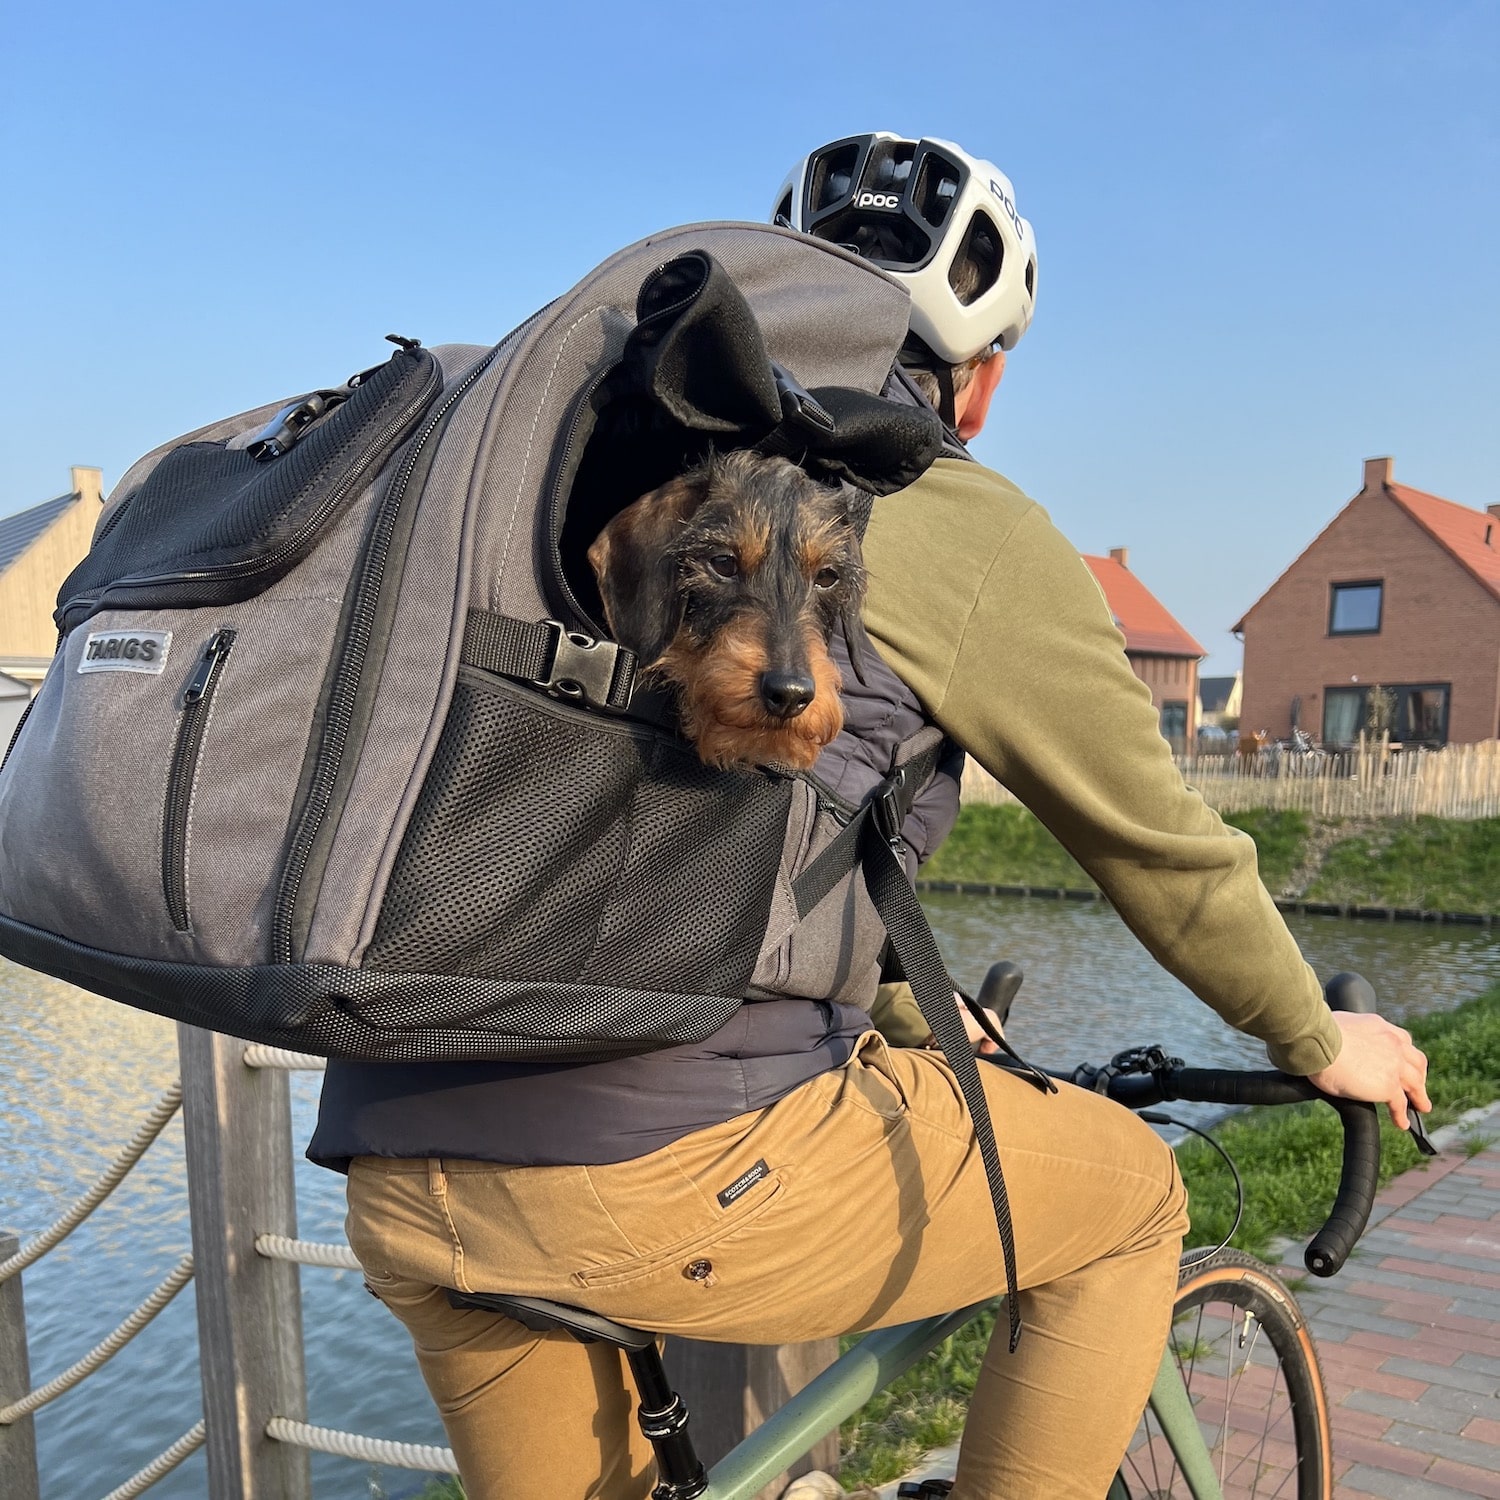 Miniature dachshund sits in TARIGS dog backpack for dachshunds on the bike